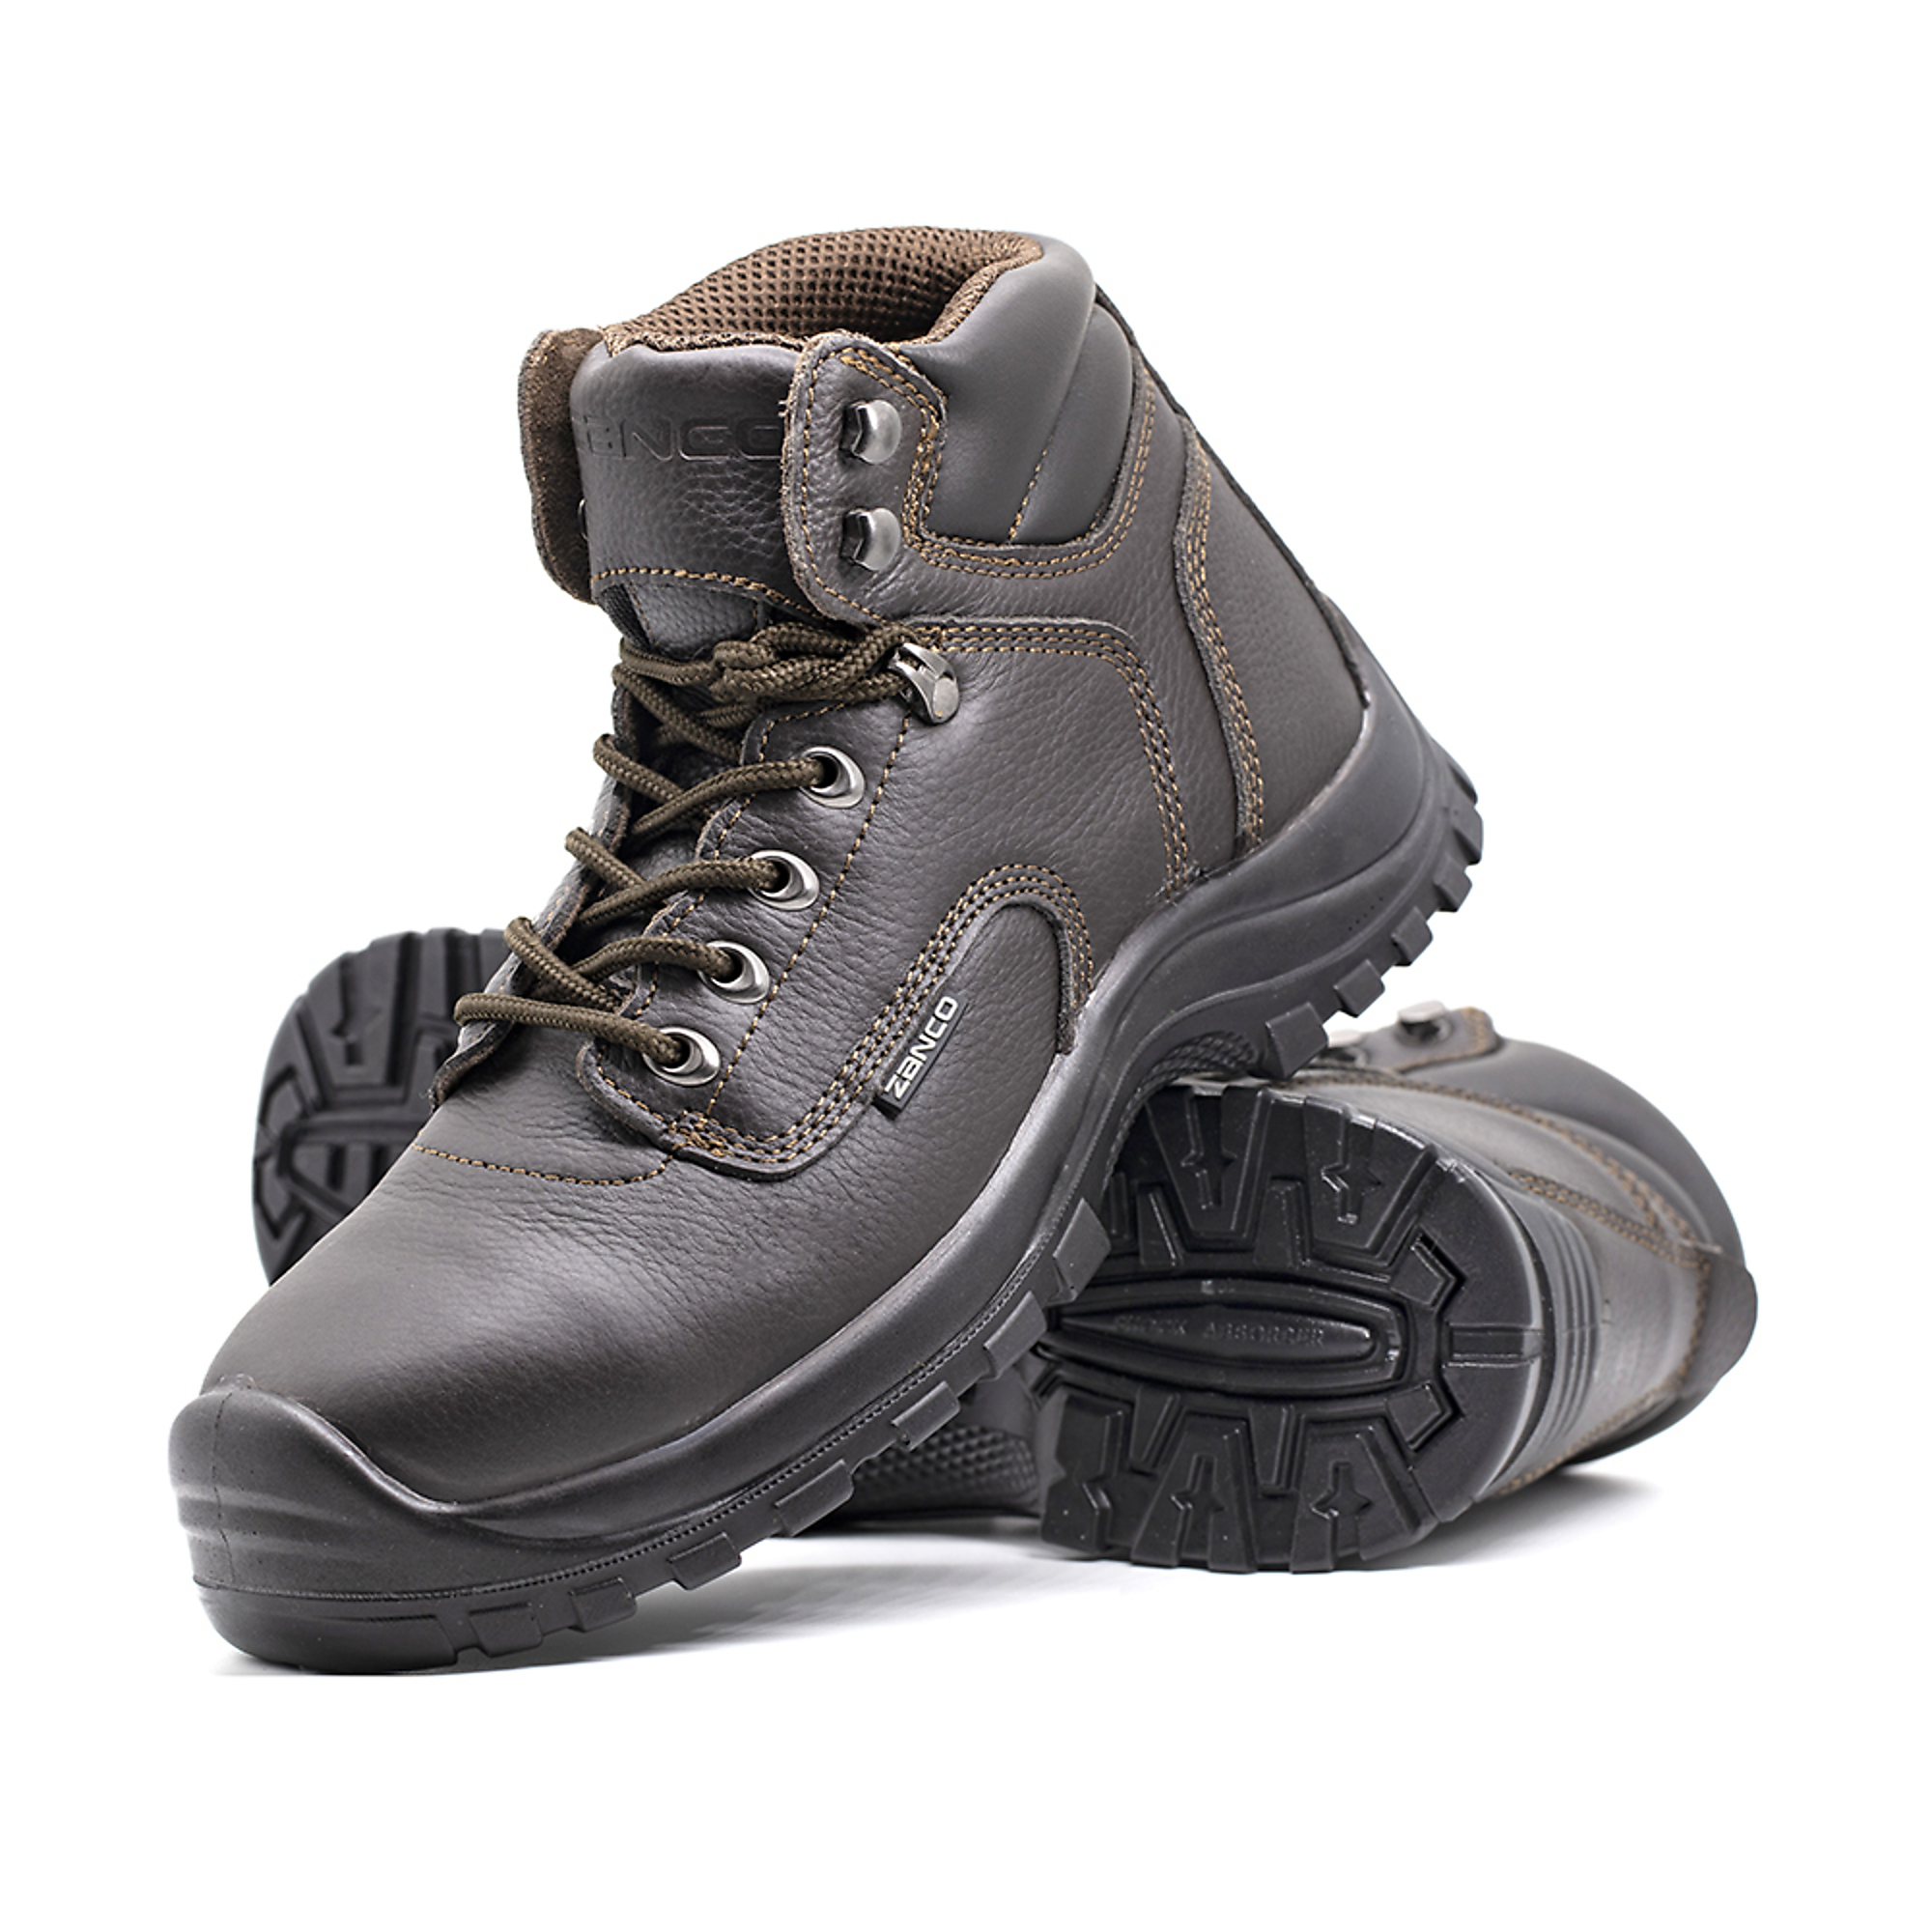 Zanco, Men's Waterproof,Steel toe,EH,Safety boots, Size 8 1/2, Width Medium, Color BROWN, Model 7668-SE-8.5